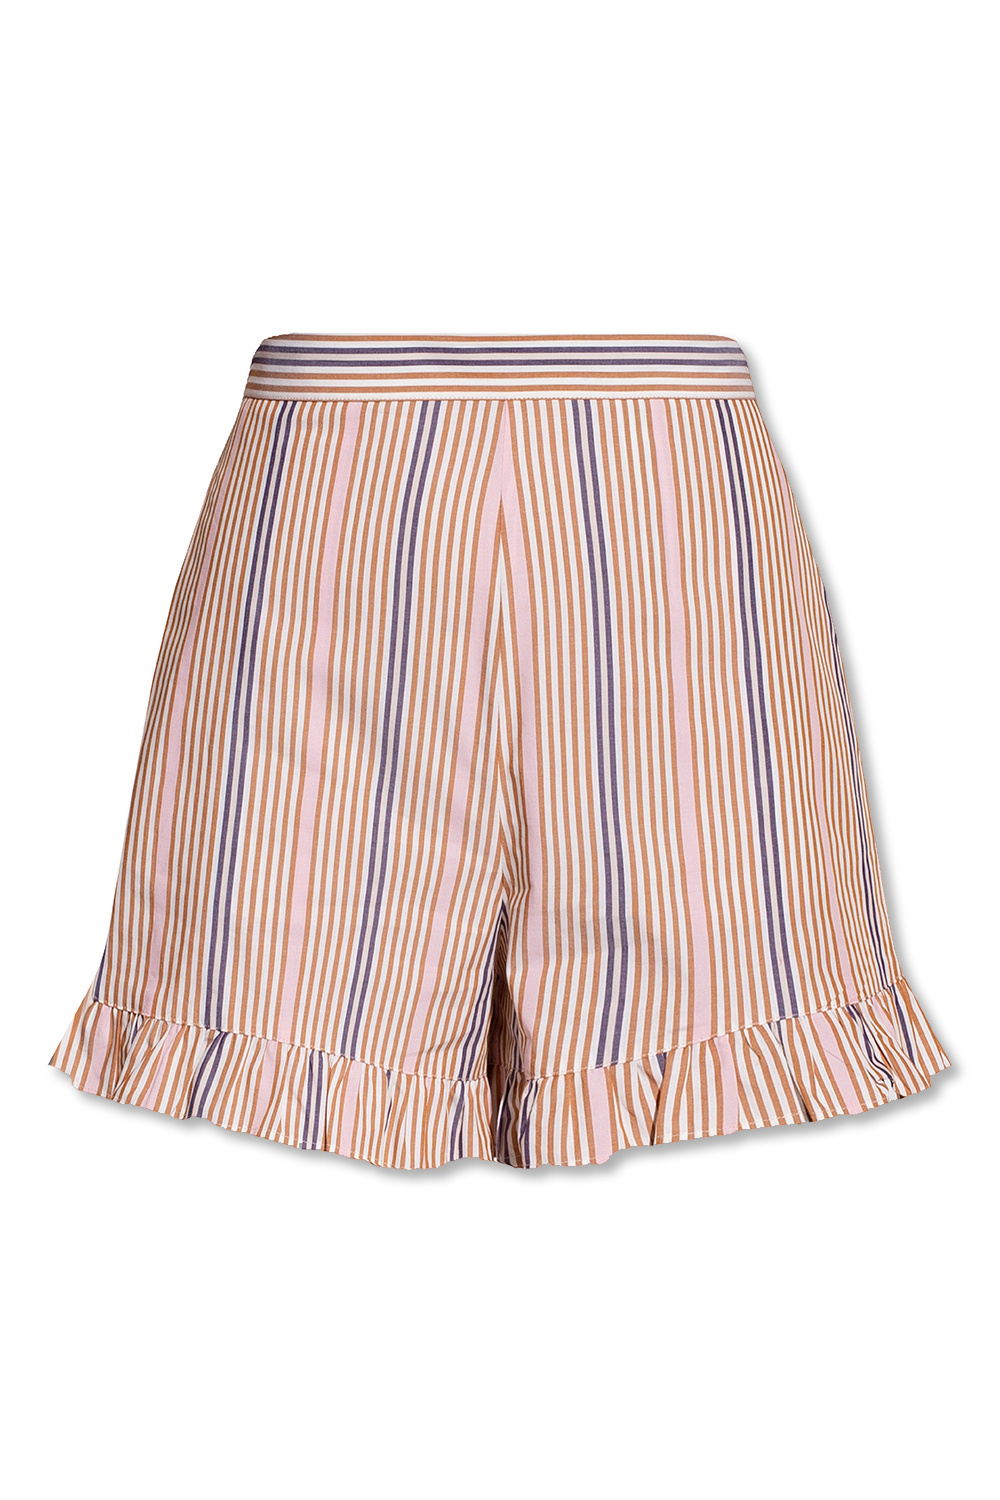 Womens Clothing Shorts Jean and denim shorts See By Chloé See By Chloe Striped Denim Shorts 